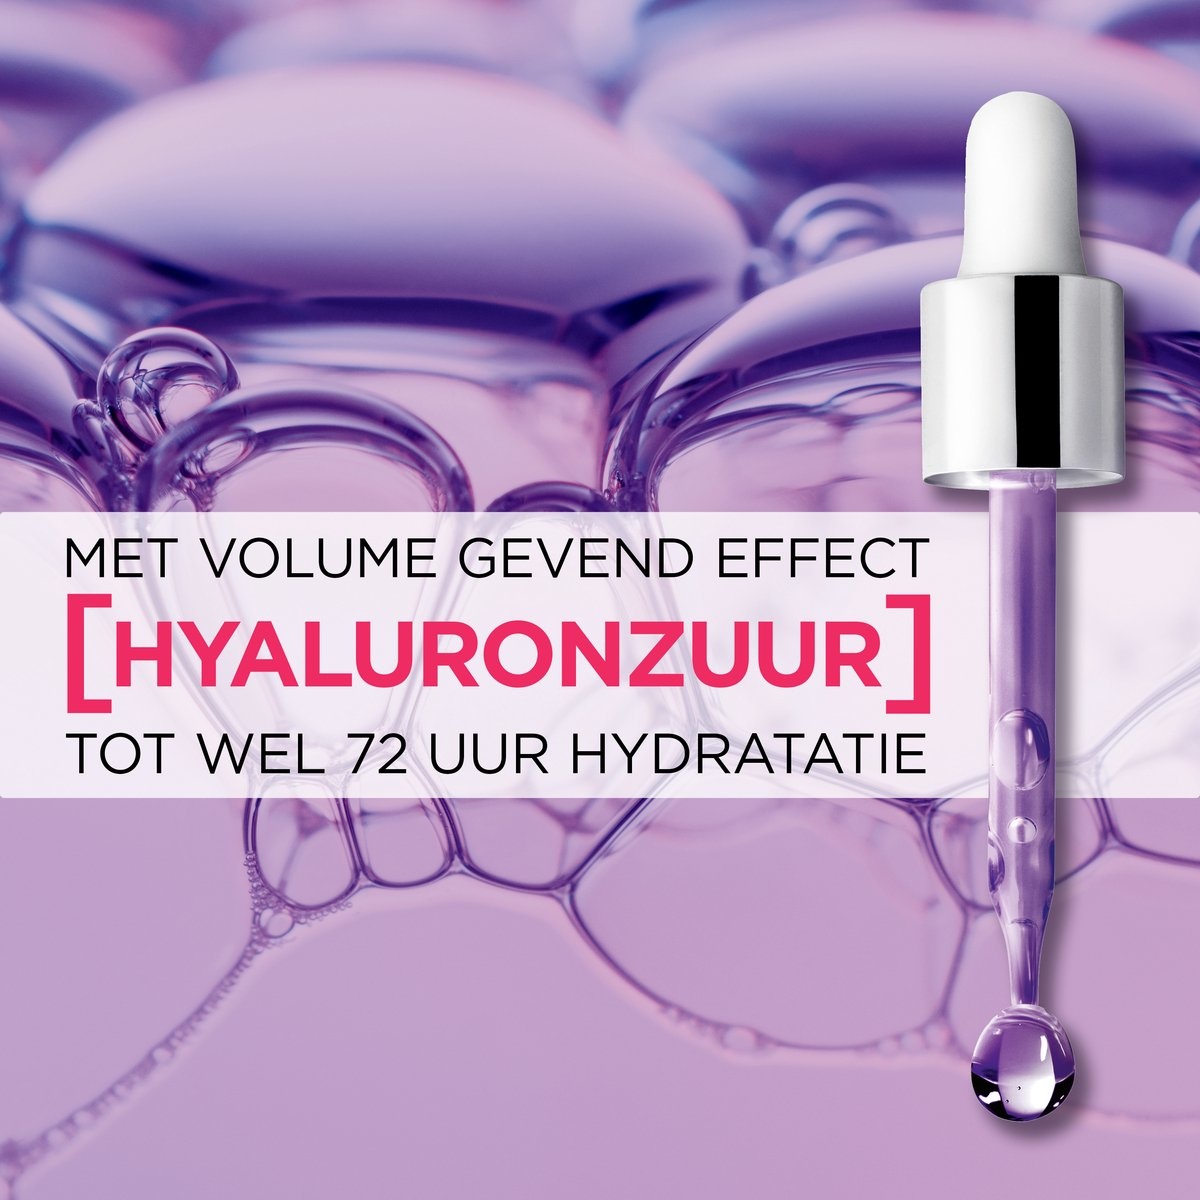 L'Oréal Elvive - Après-shampooing hydratant Hydra Hyaluronic - 200 ml